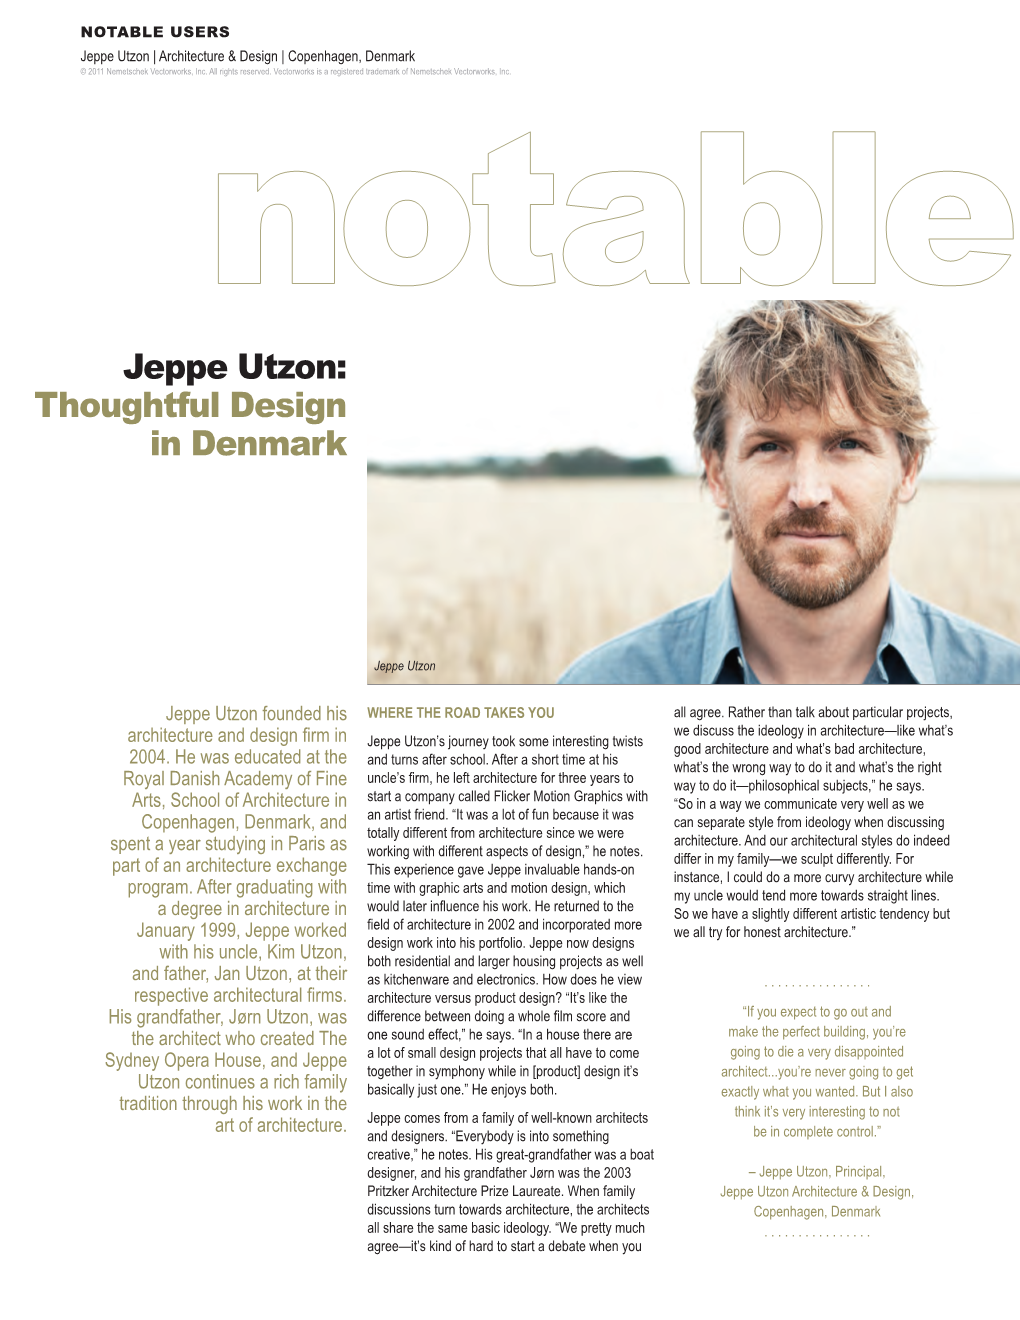 Jeppe Utzon: Thoughtful Design in Denmark